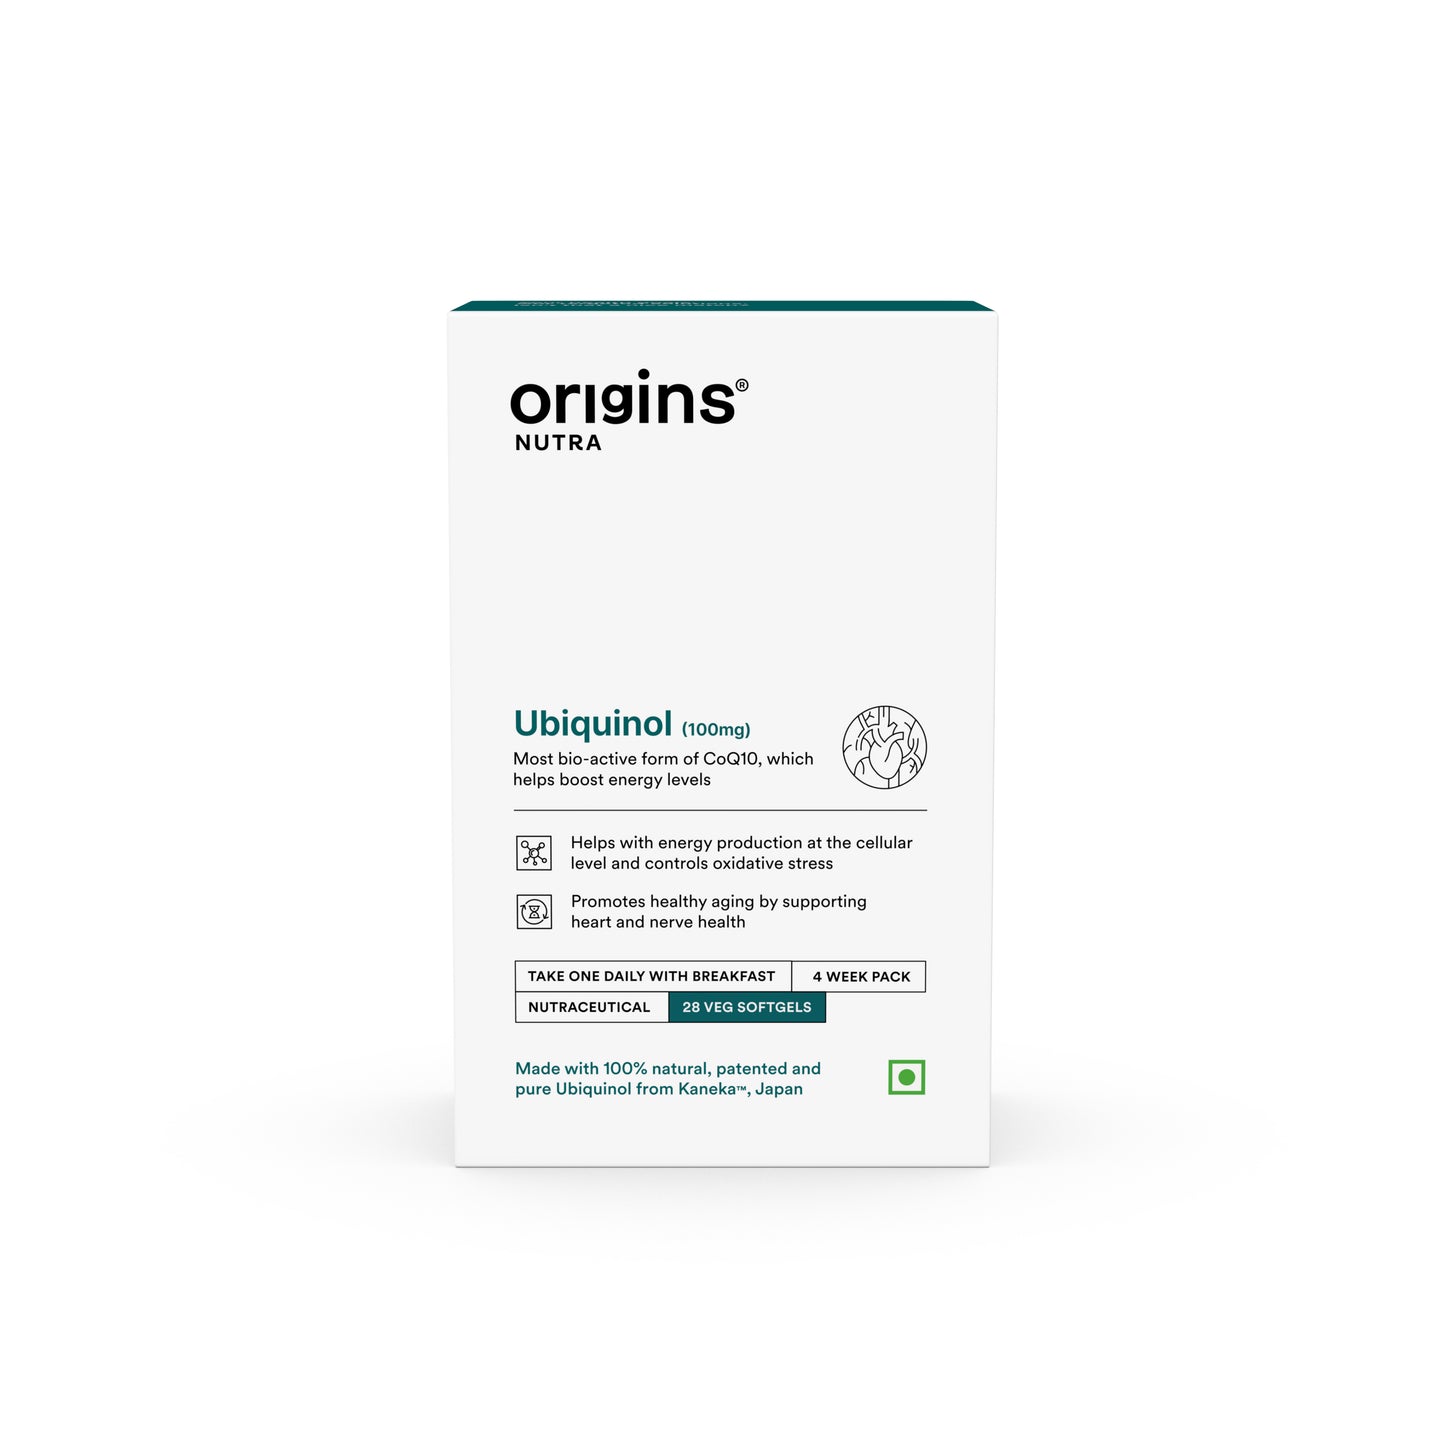 Origins Nutra Ubiquinol (100mg) | Boost Energy, Supports Heart & Healthy Ageing, Enhance Antioxidant Protection | Ubiquinol | GMP Certified | For Men & Women | 28 Soft Gels Pack of 3